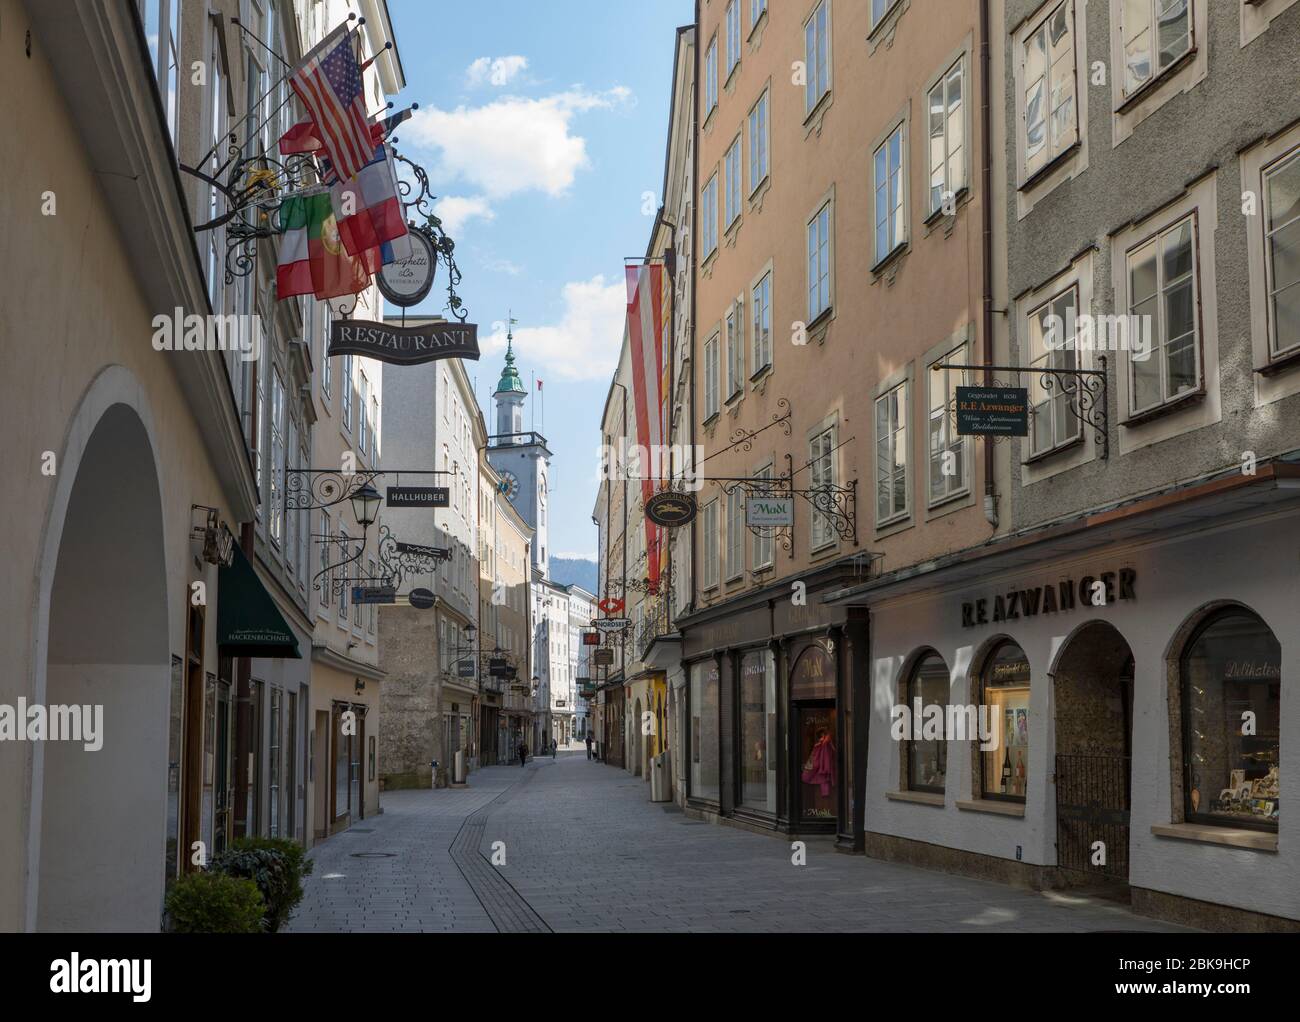 Vacant lots due to the coronavirus pandemic, Getreidegasse, Salzburg, Austria Stock Photo